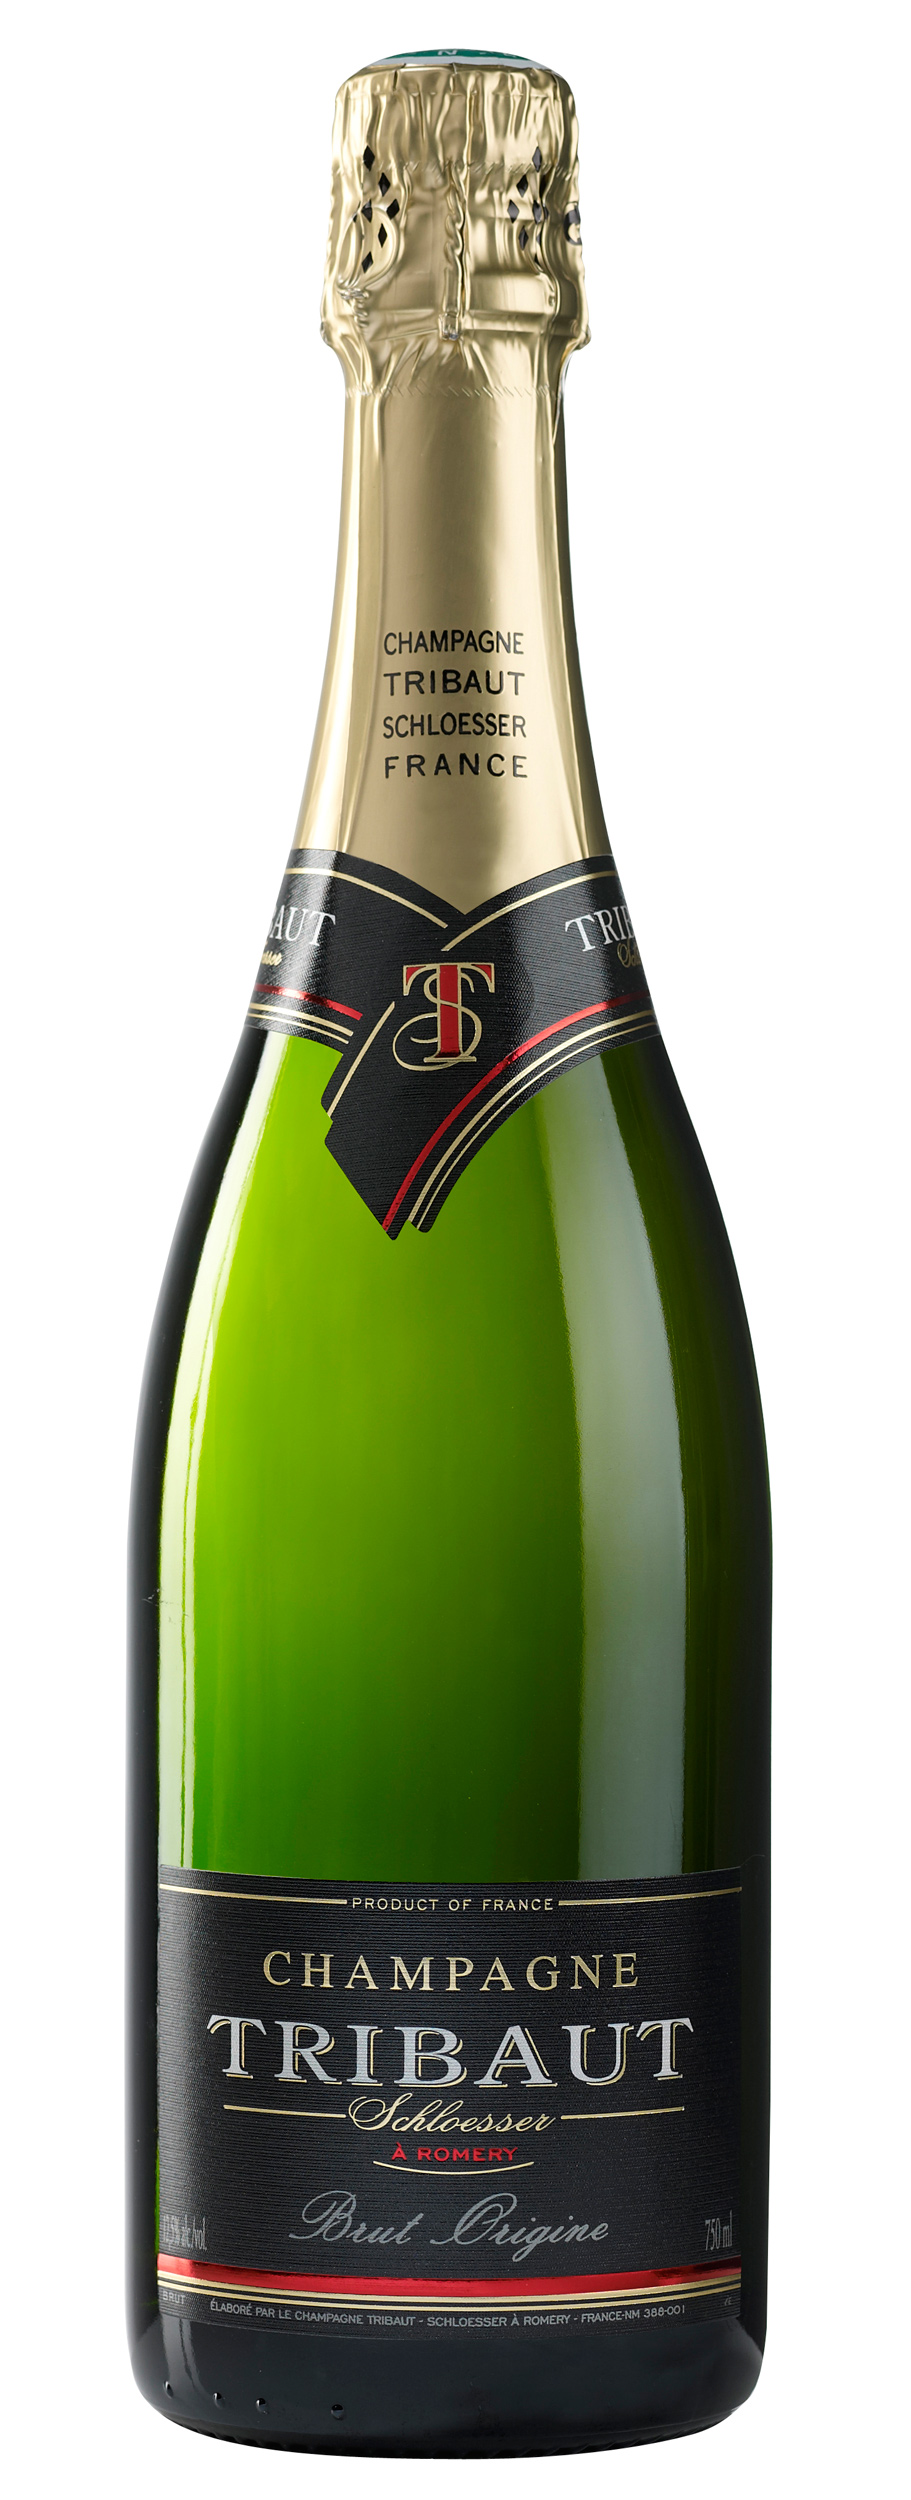 NV Champagne Tribaut Le Brut Origine Magnum - click image for full description